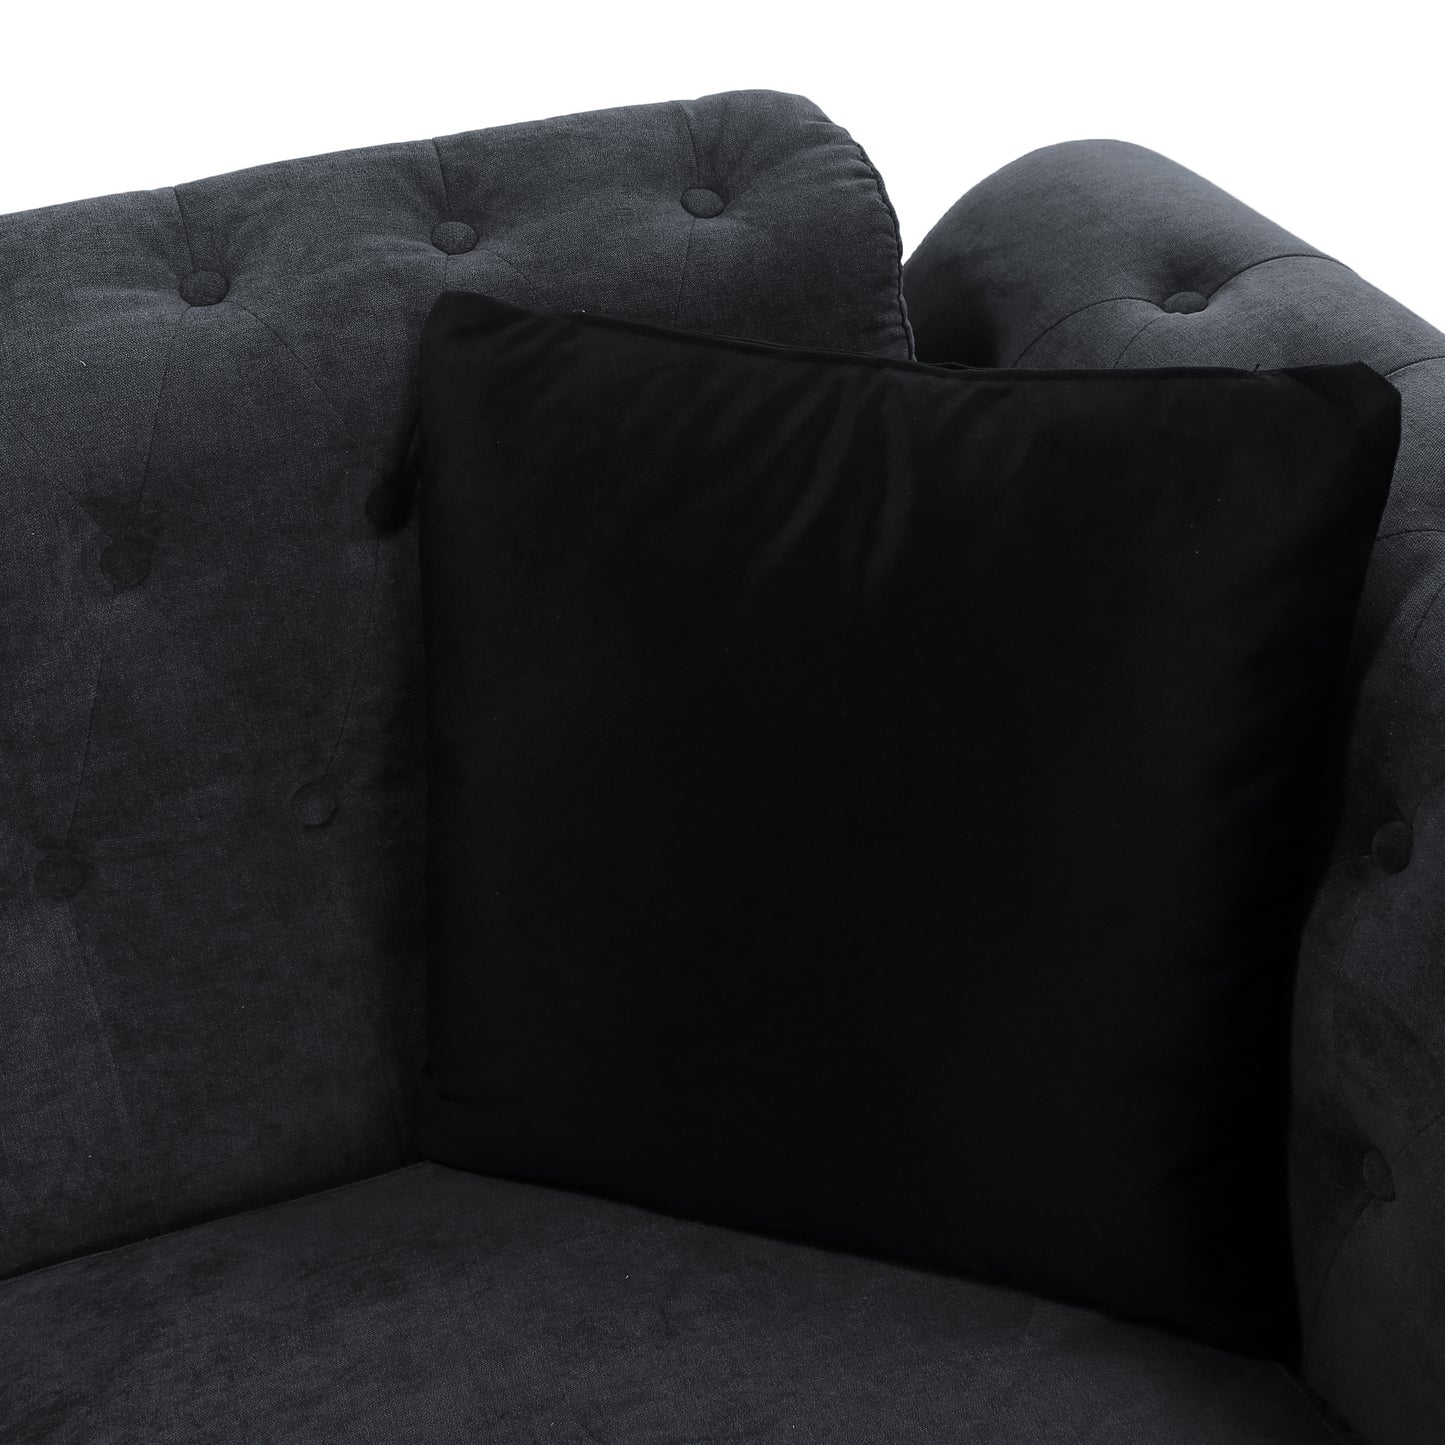 Sofa with 2 pillows